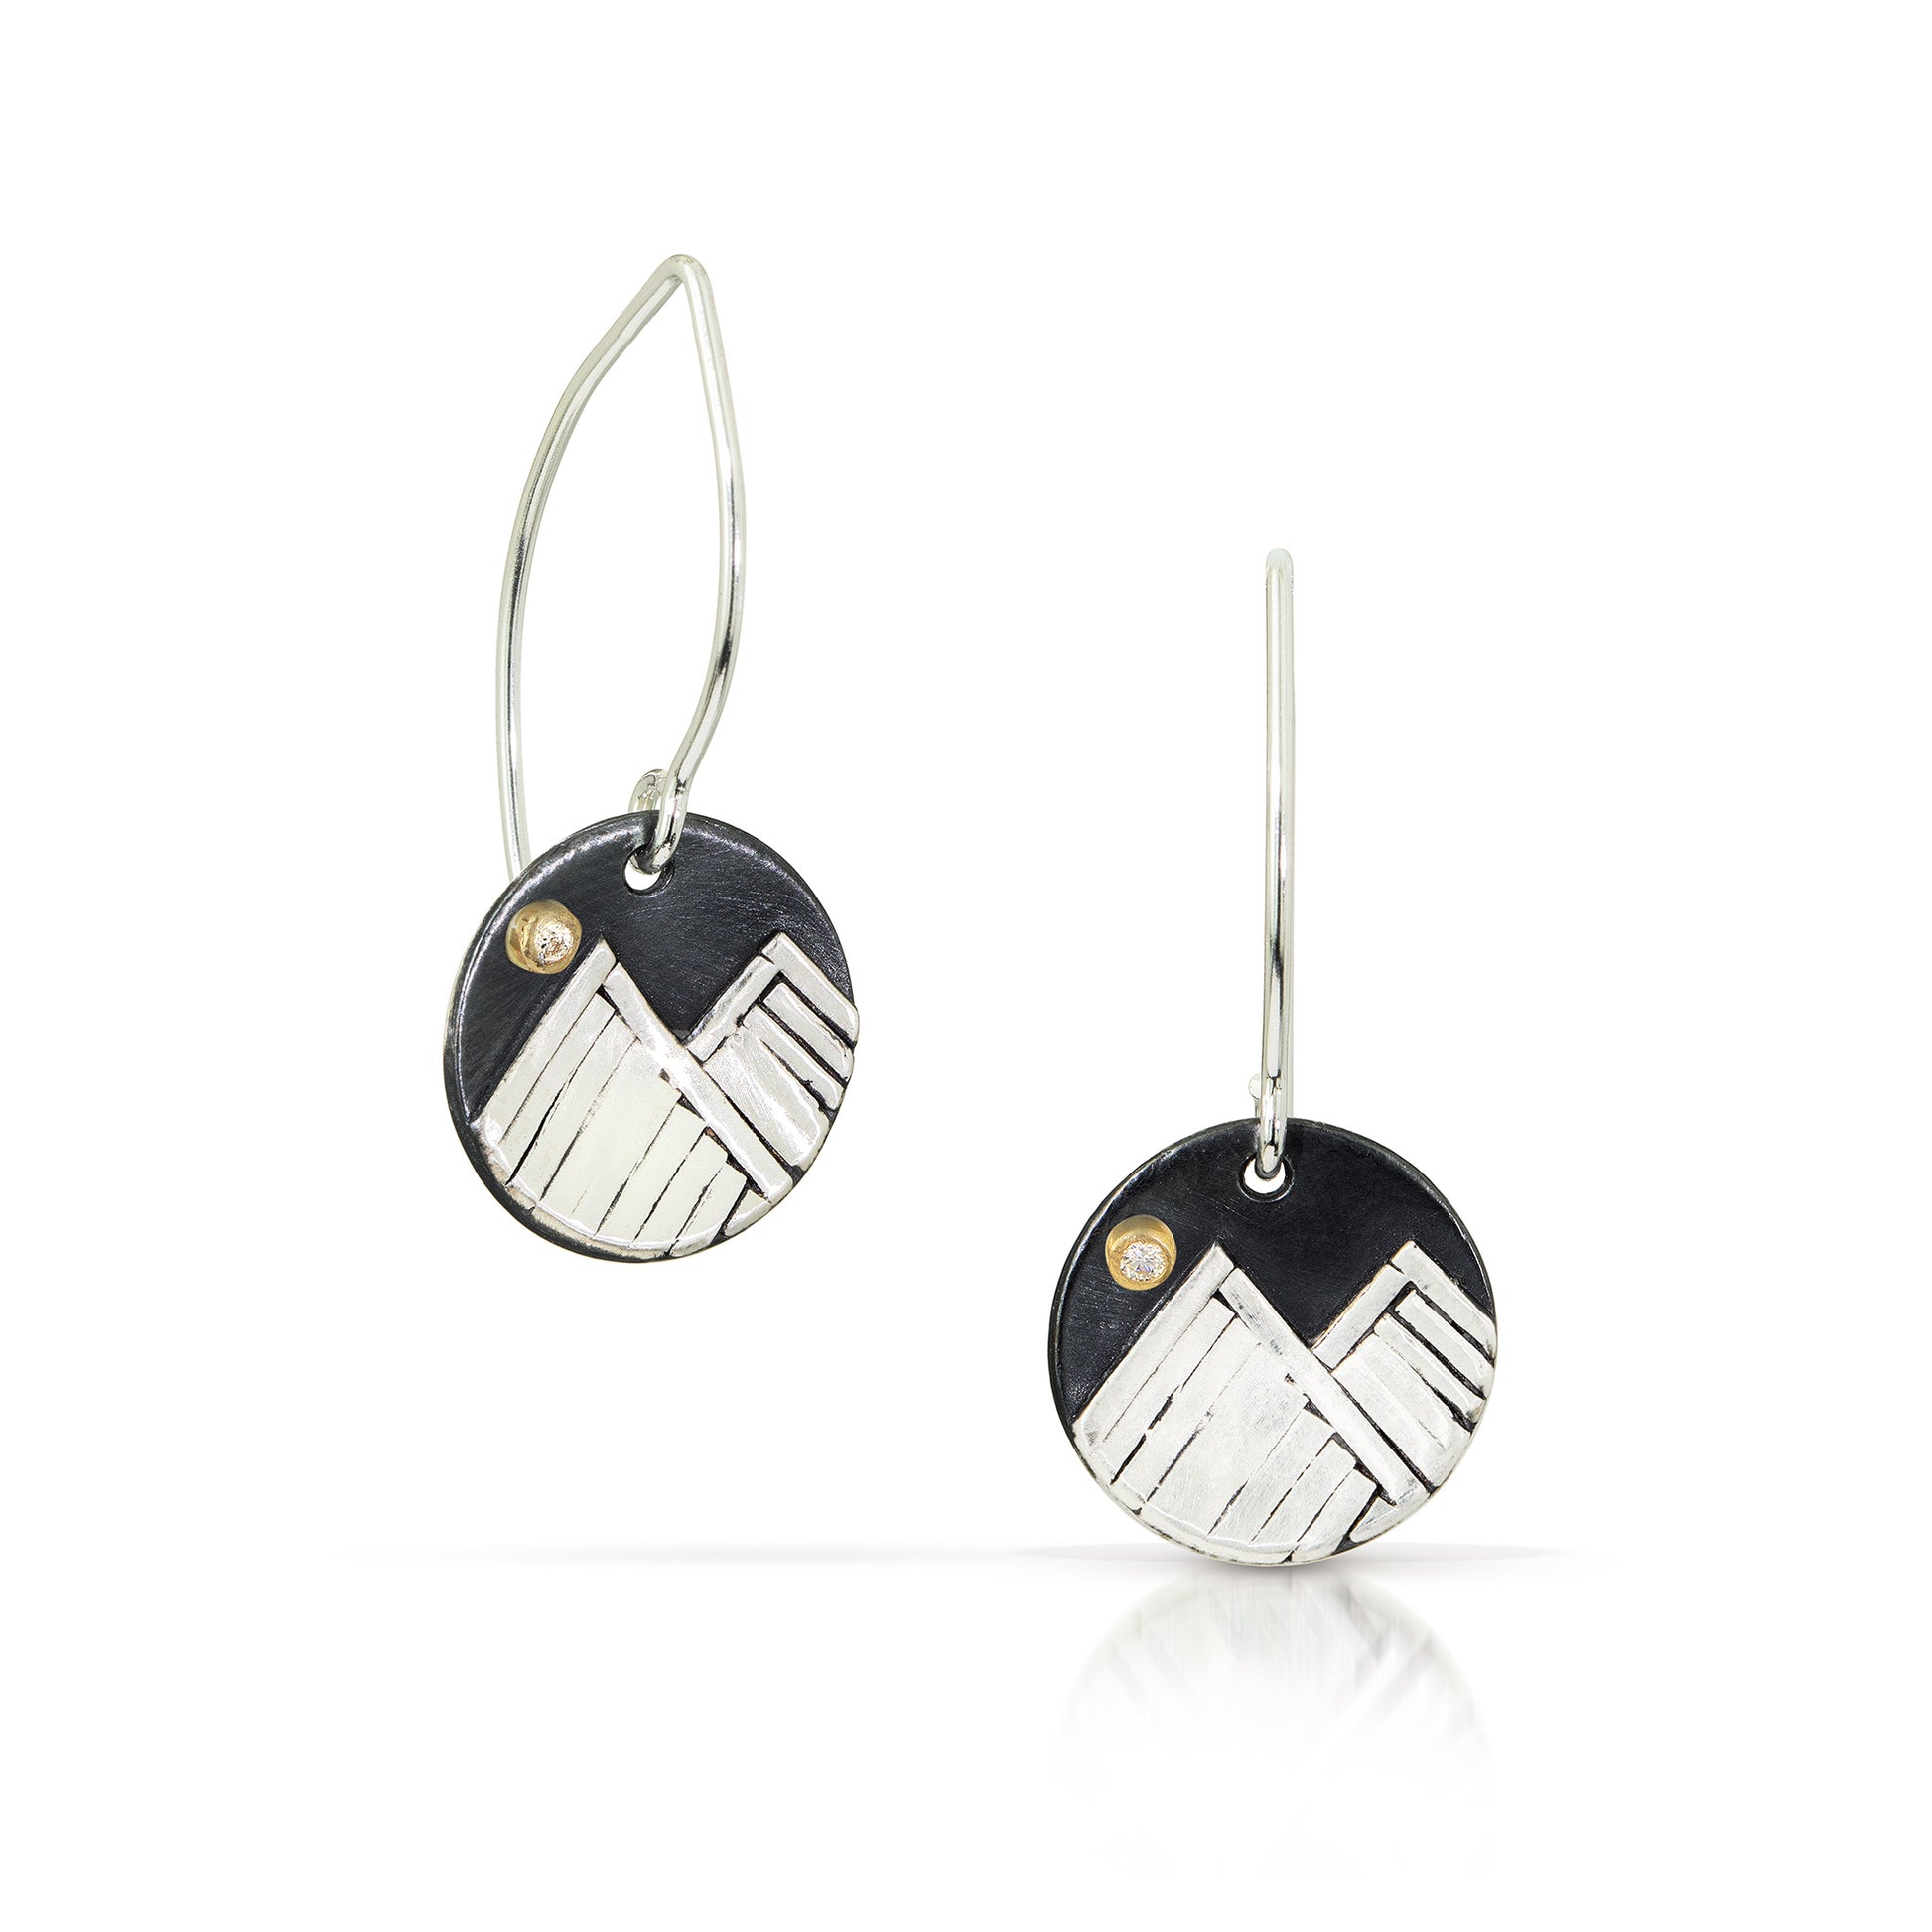 Mountain Earrings with Diamond Moons by Jen Lesea Designs